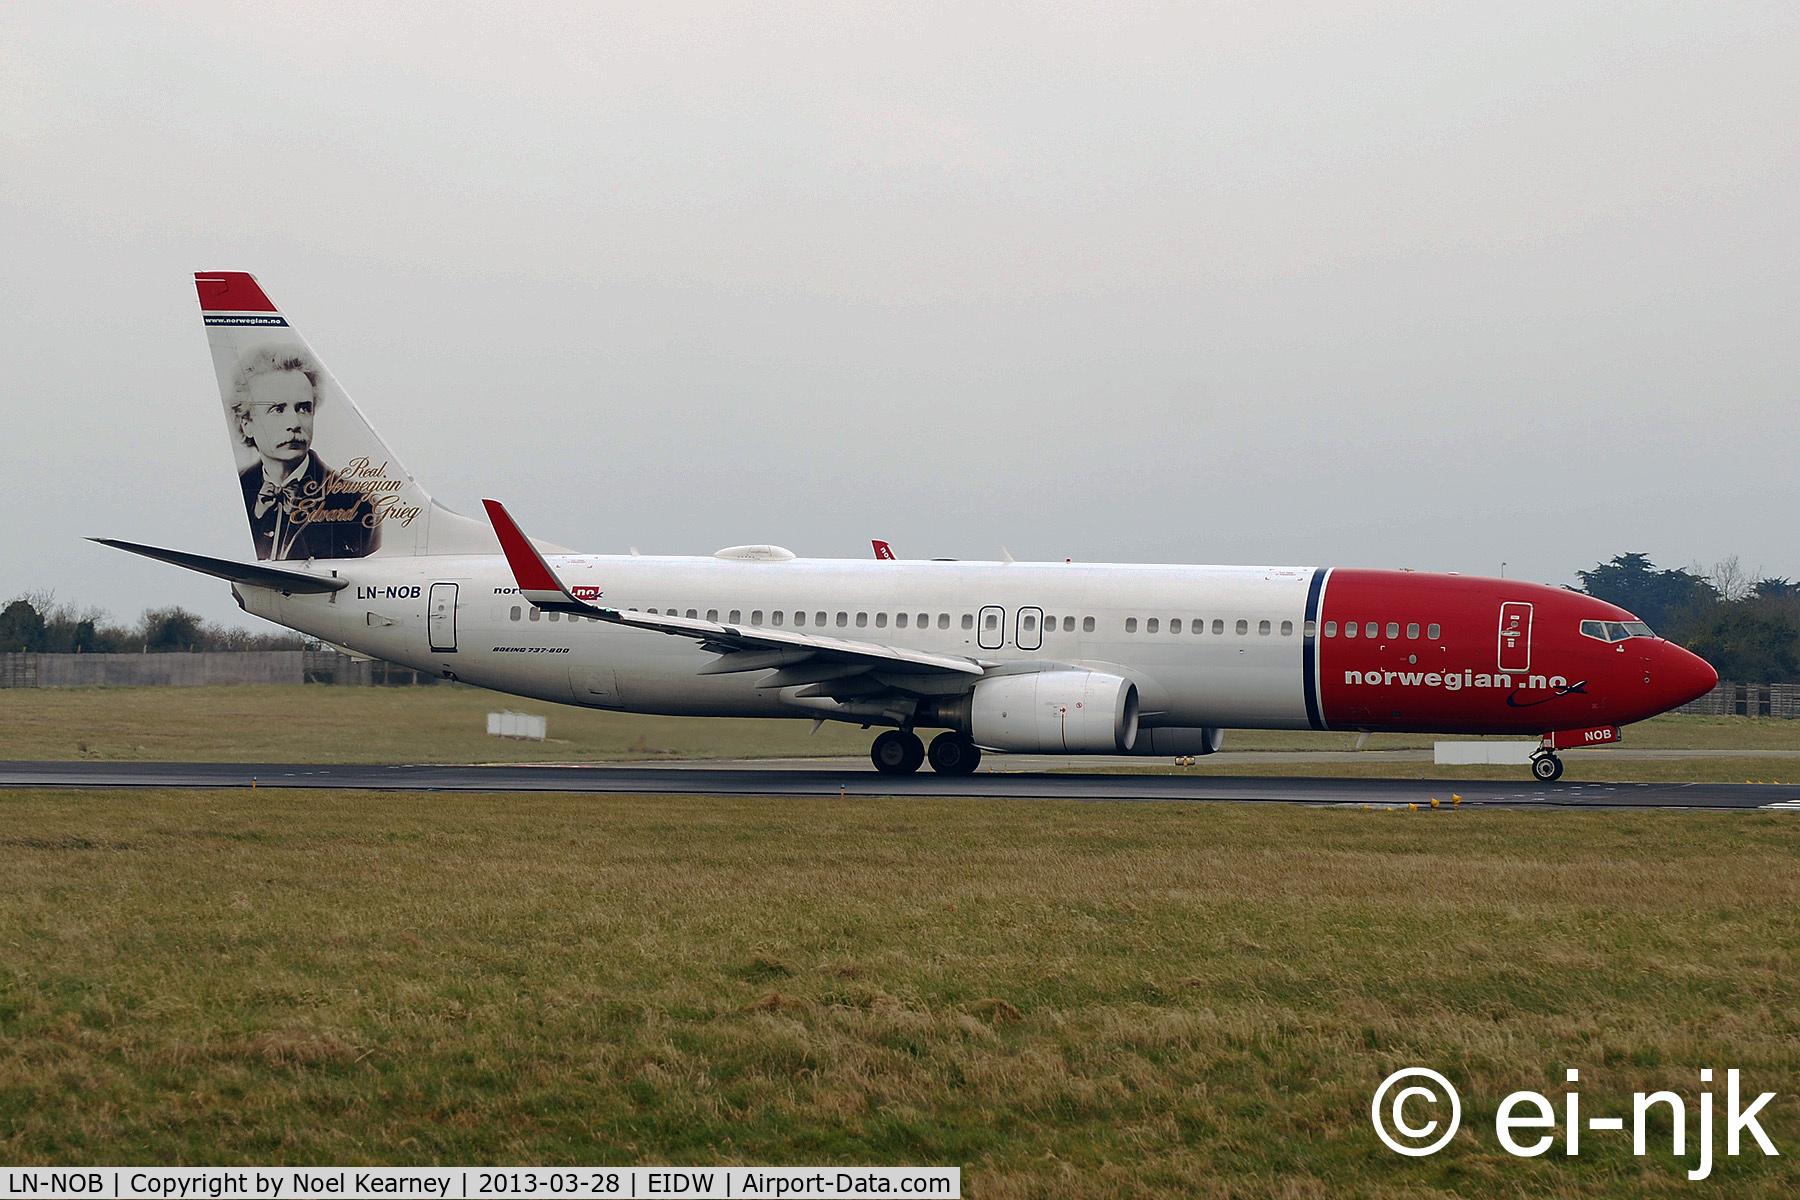 LN-NOB, 2008 Boeing 737-8FZ C/N 34954, Awaiting departure off Rwy 10 at Dublin.